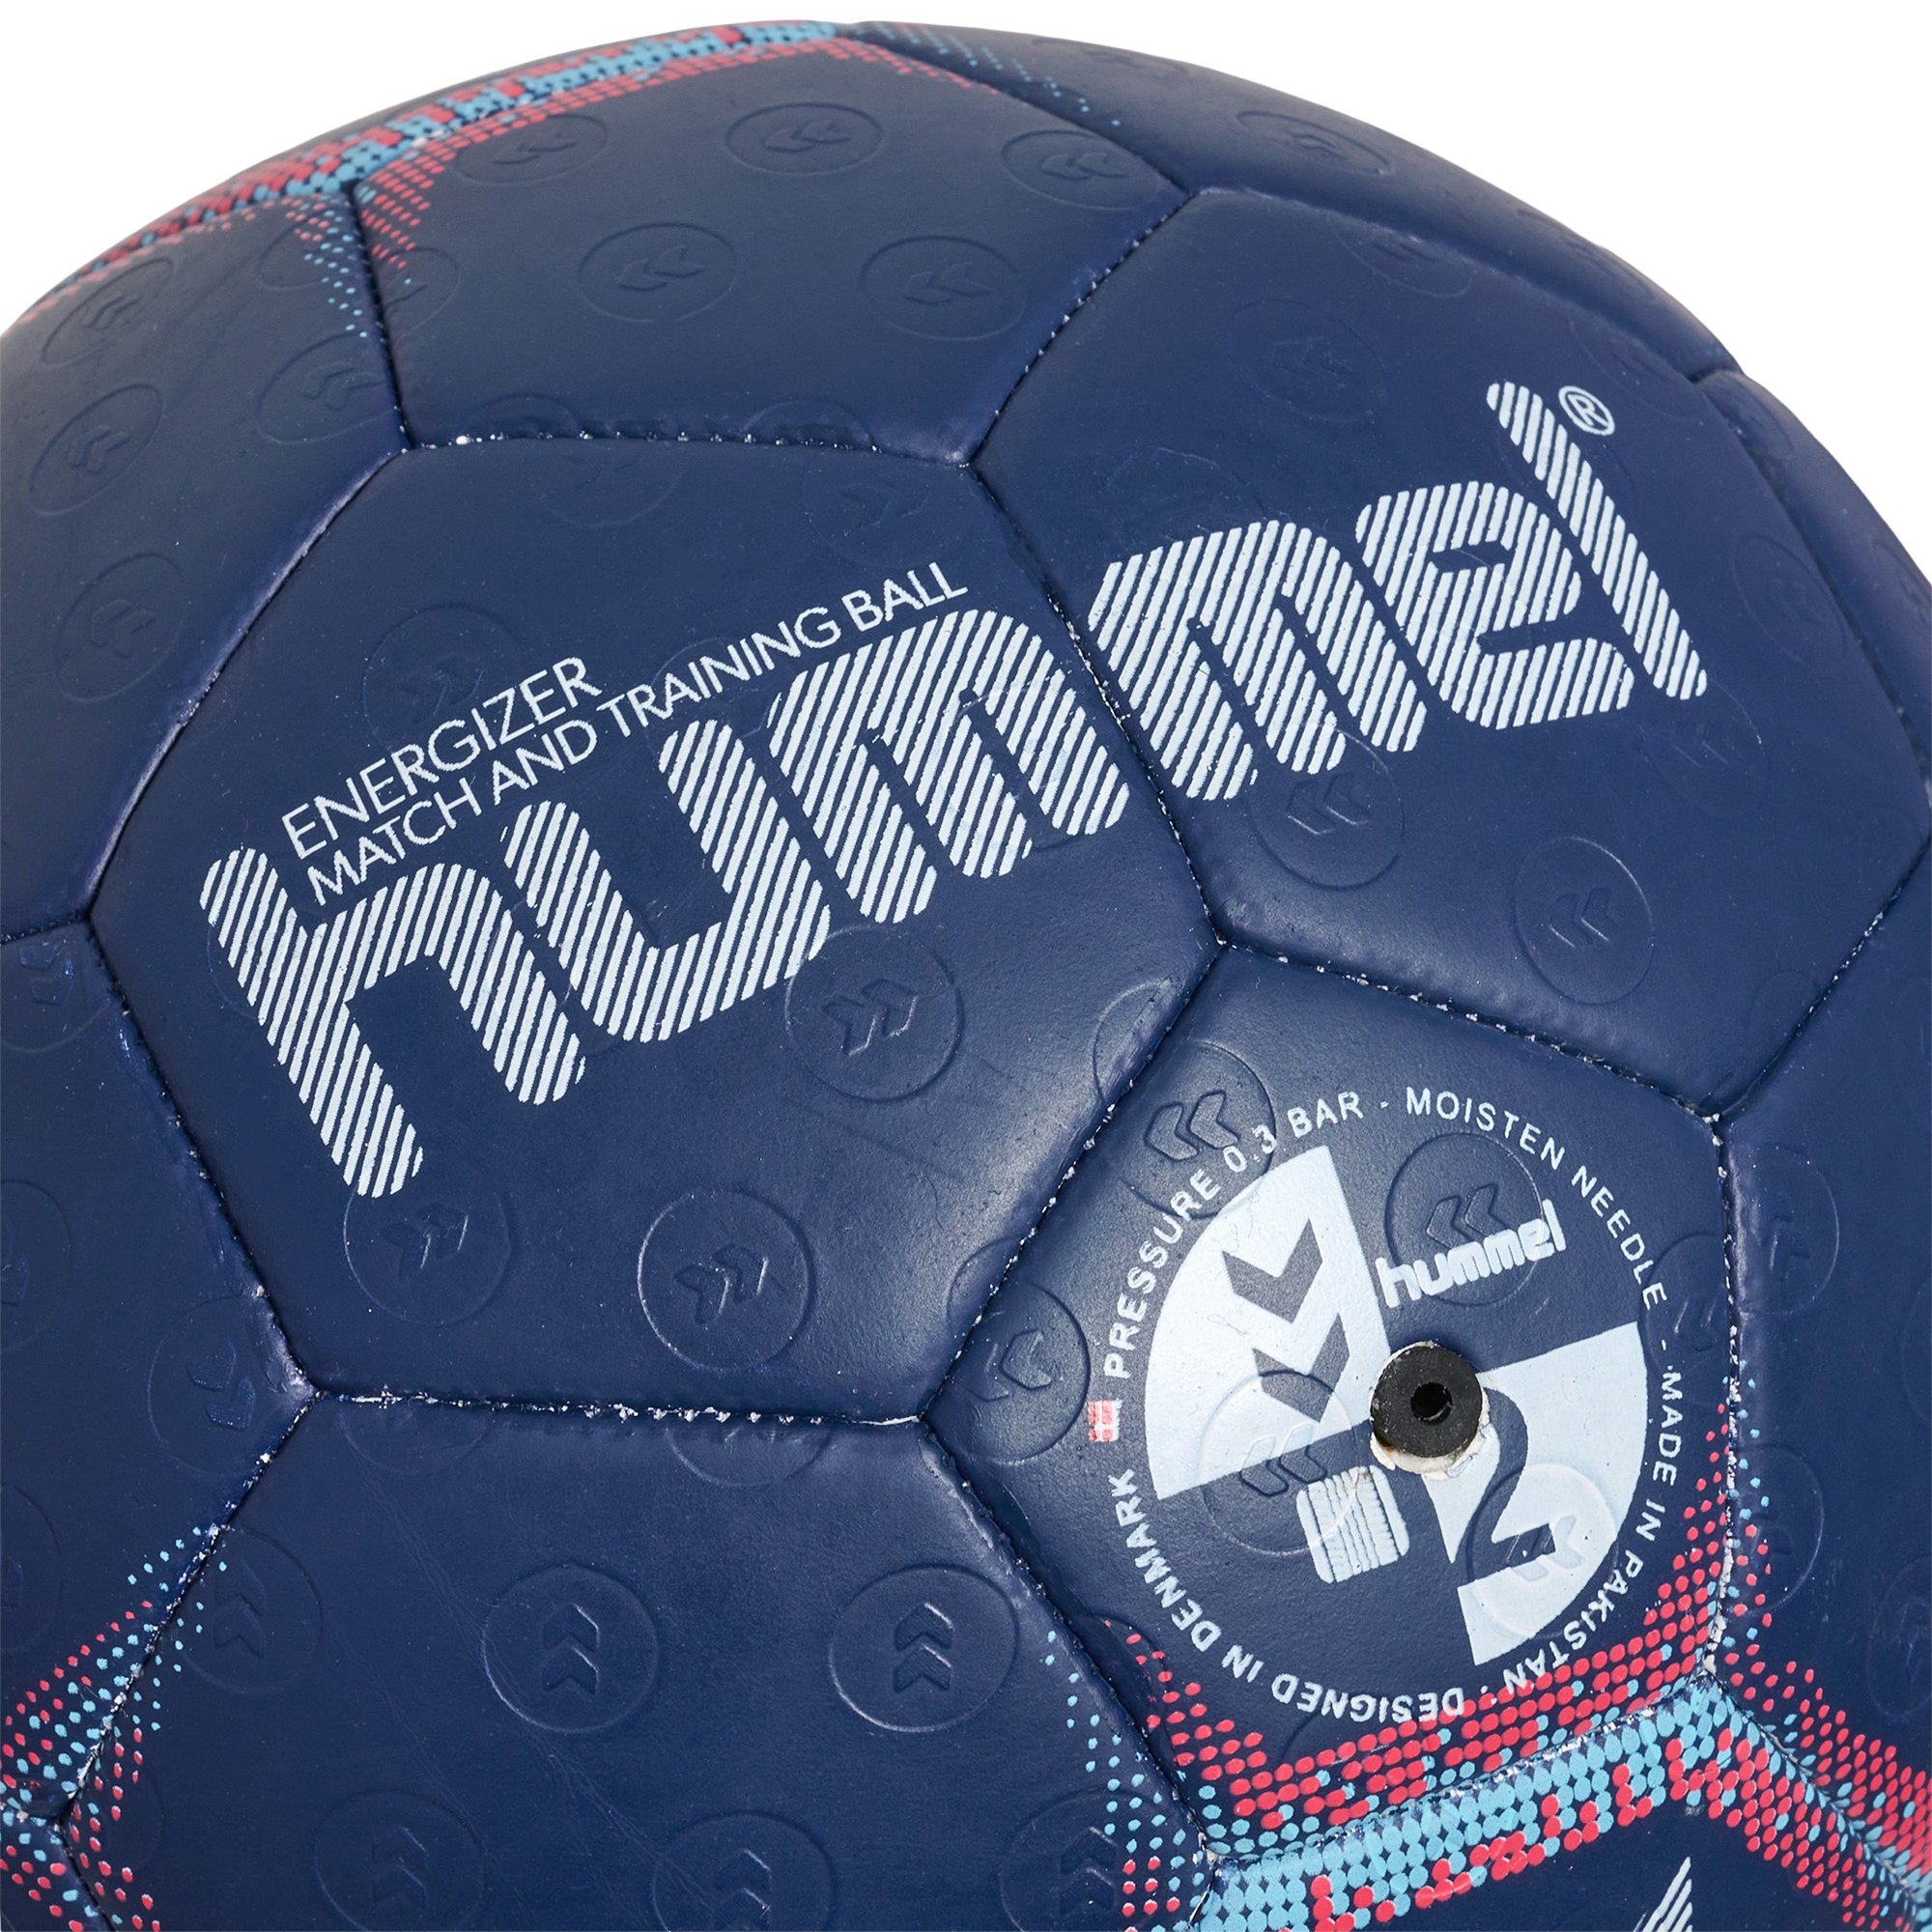 Hummel Energizer Handball